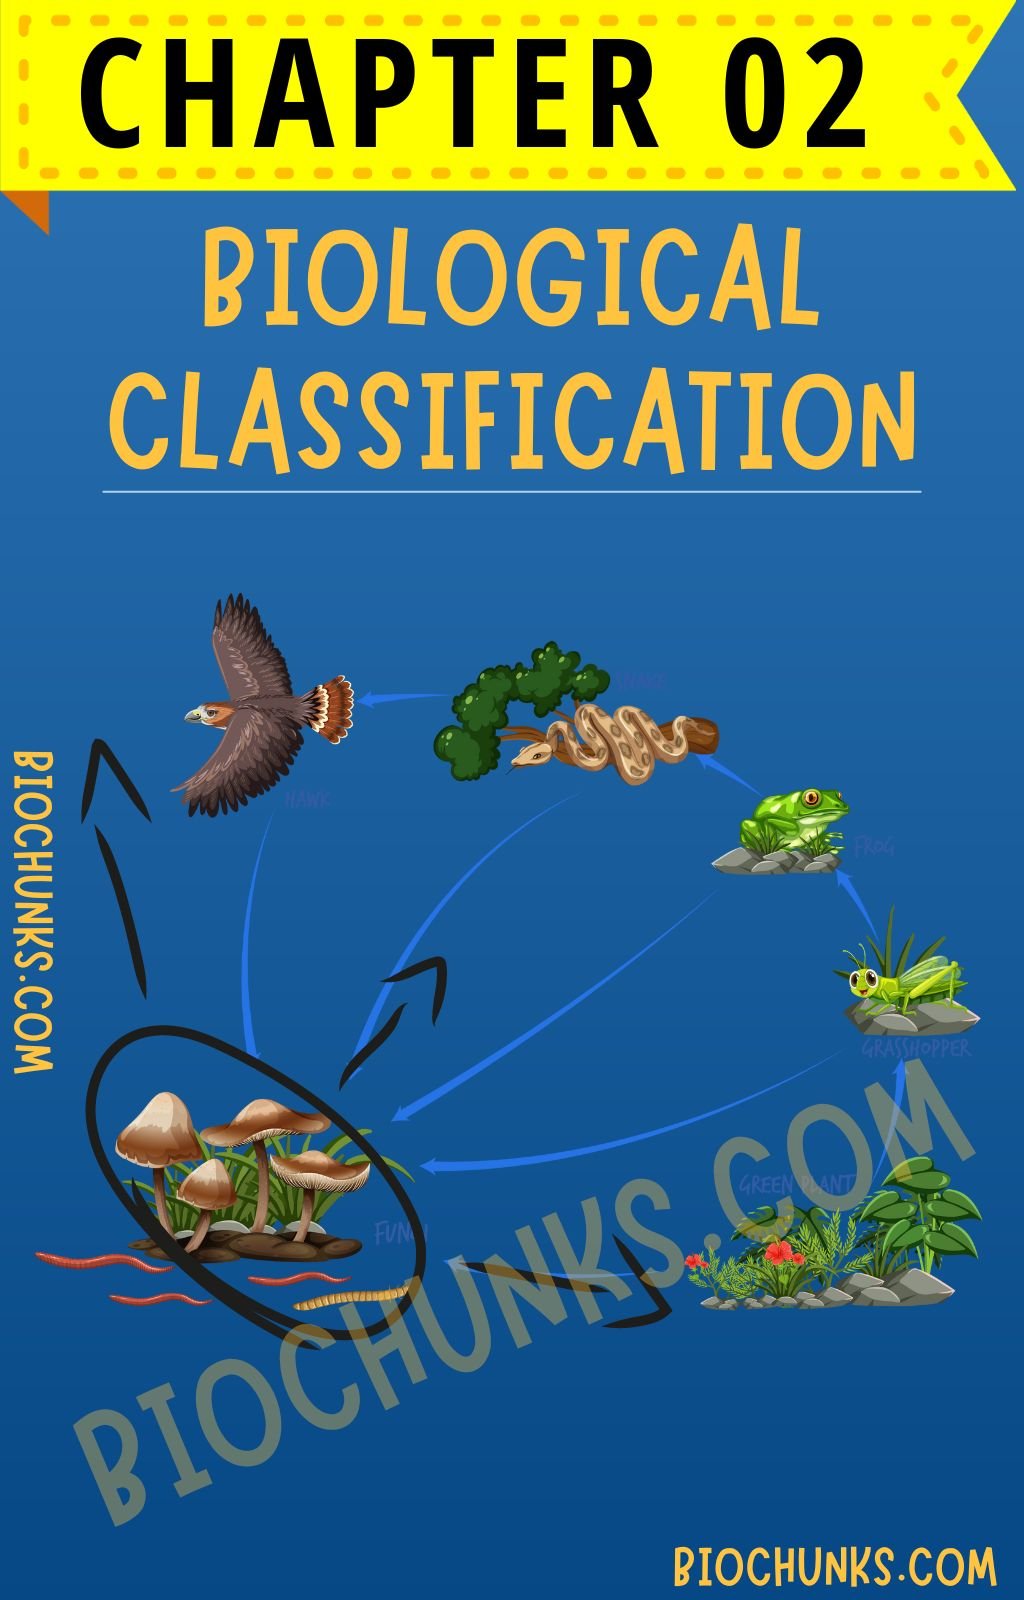 Biological Classification Chapter 02 Class 11th biochunks.com